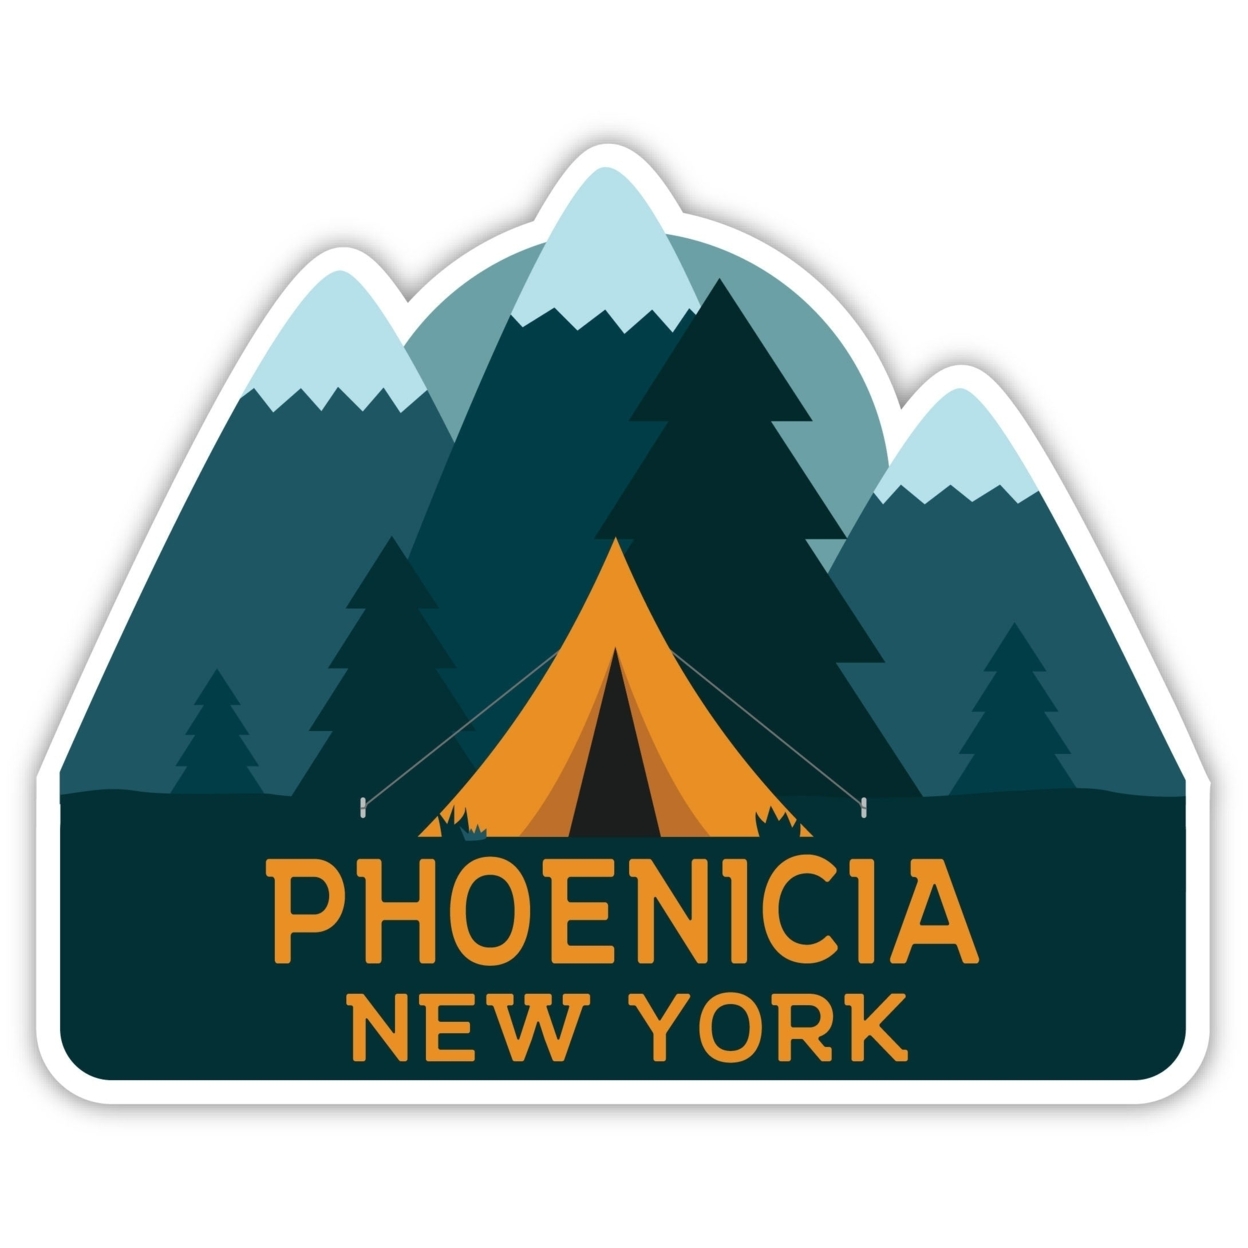 Phoenicia New York Souvenir Decorative Stickers (Choose Theme And Size) - Single Unit, 4-Inch, Tent